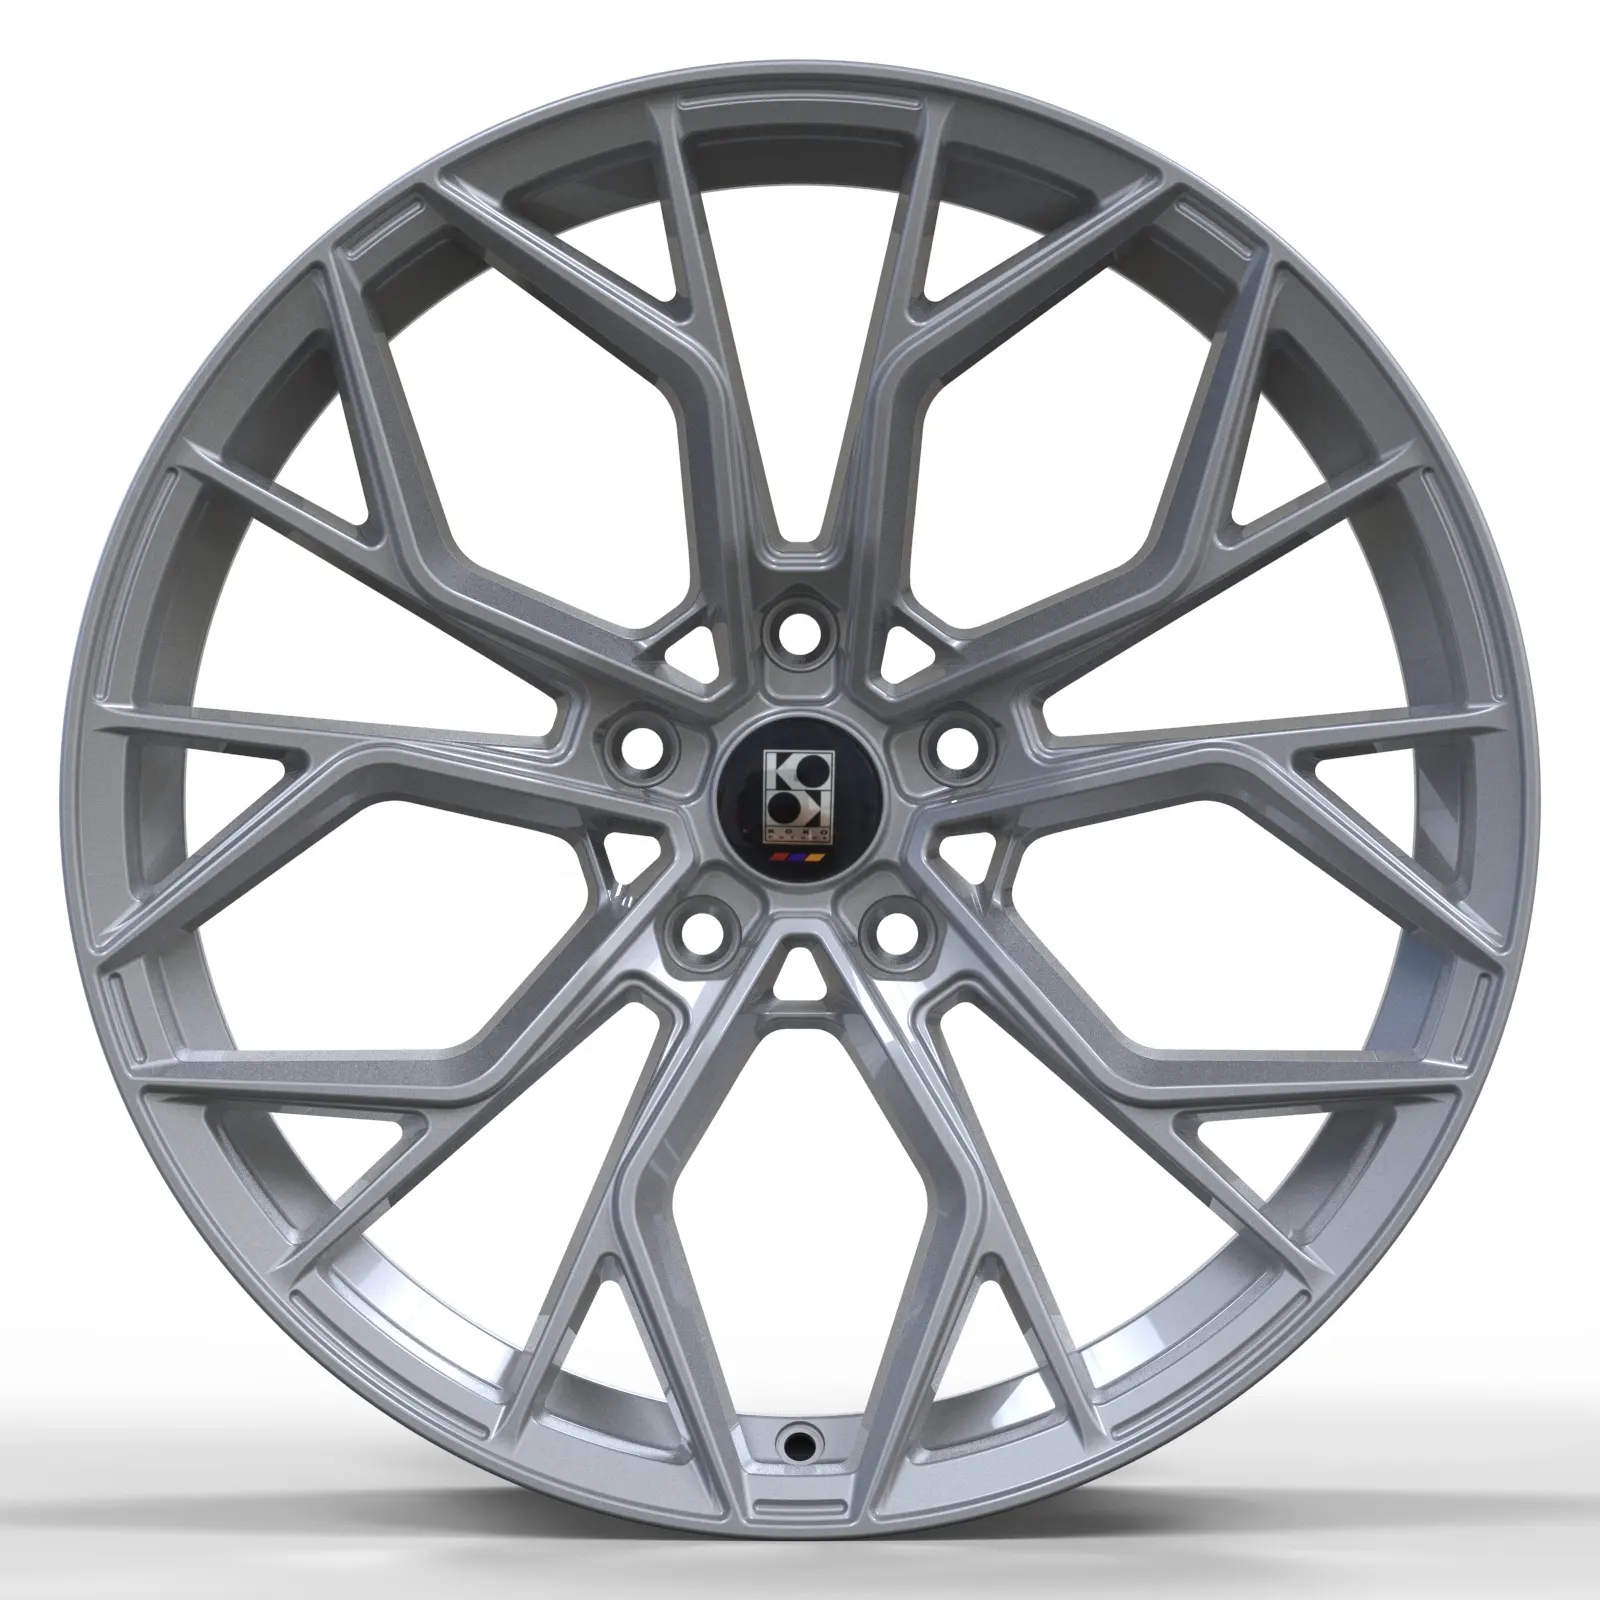 19 inch Black Alloy Cast Wheels Car Rims Passenger Car Wheels